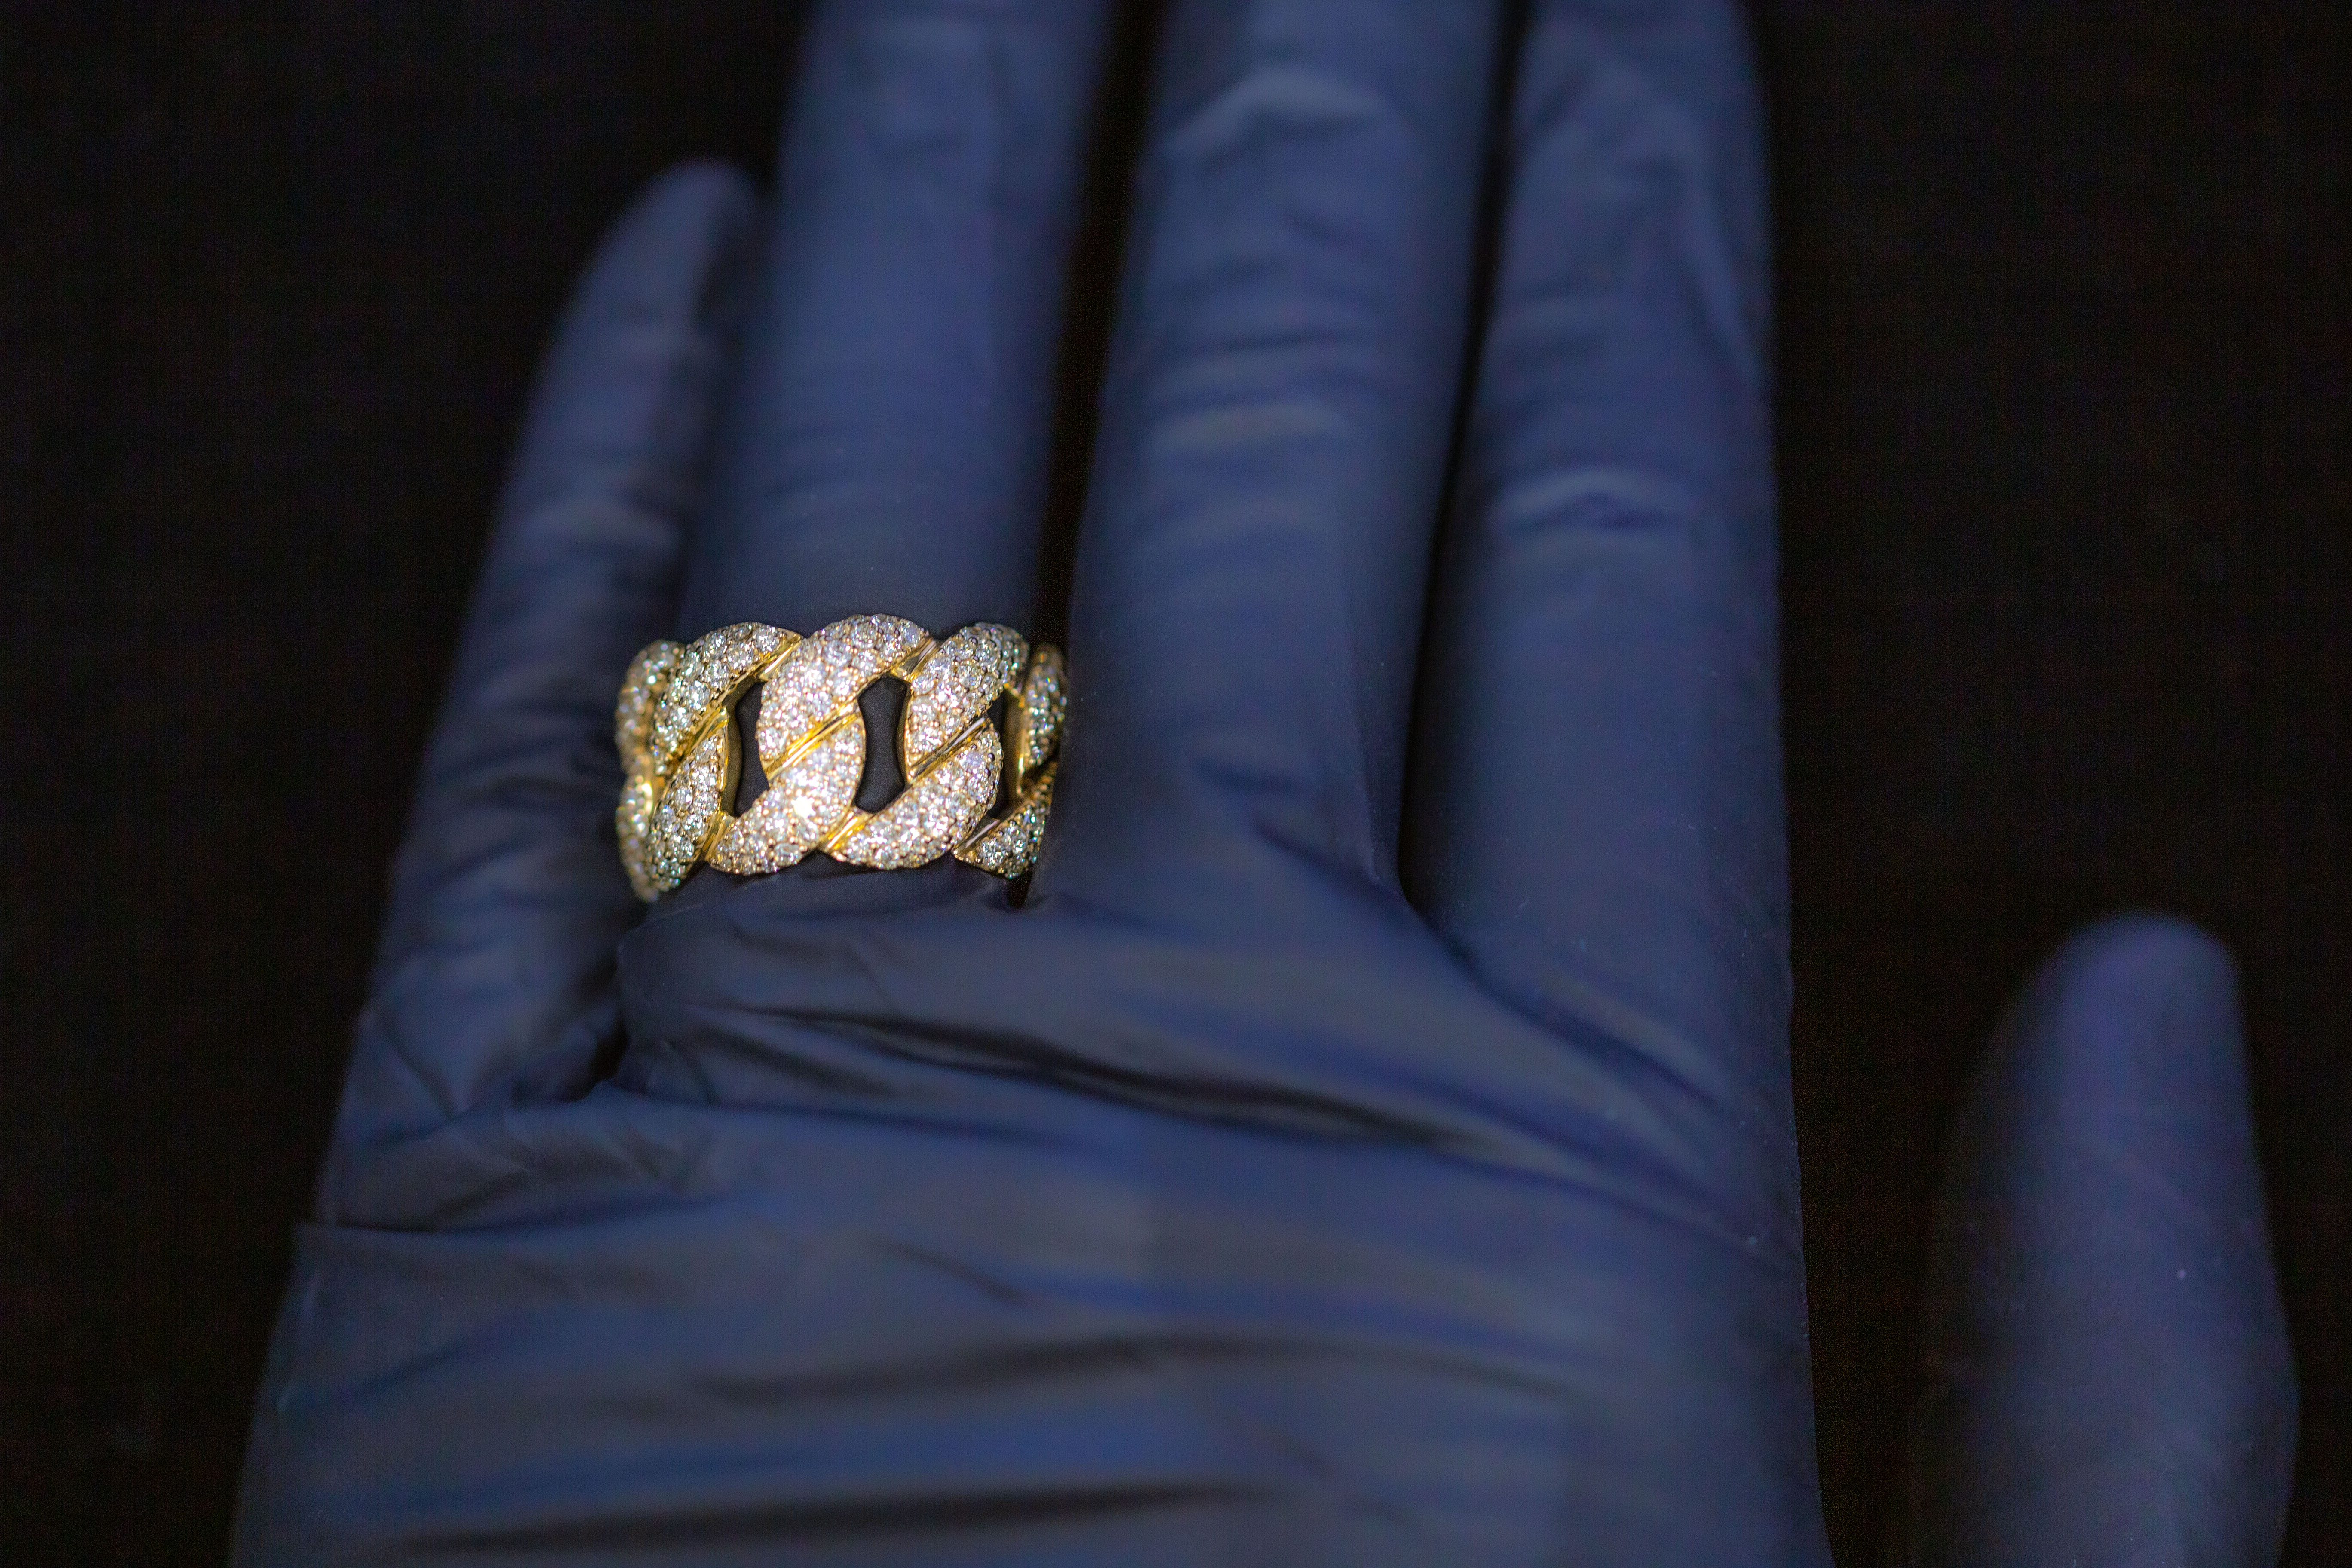 4.90 CT. Diamond Ring in 10K Gold - White Carat Diamonds 